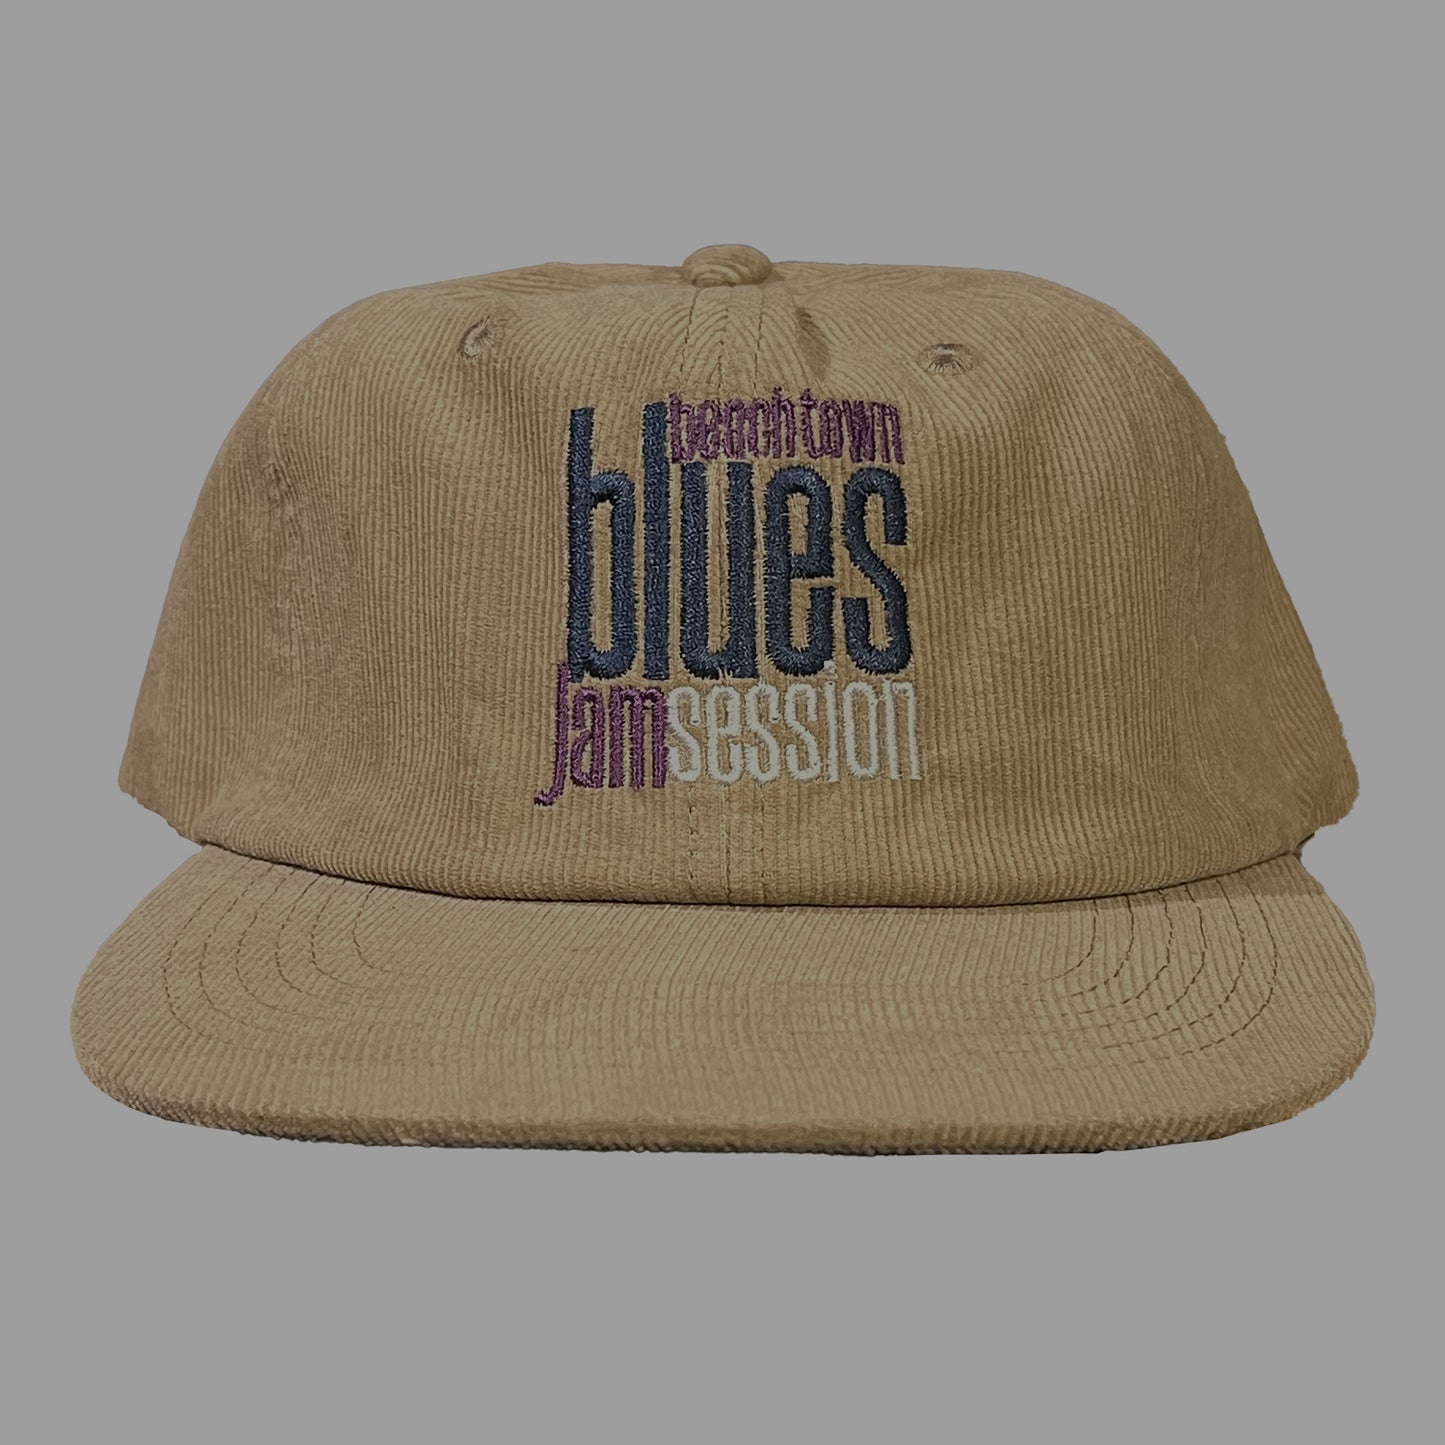 BEACHTOWN BLUES JAM SESSION CORDUROY SNAPBACK CAP